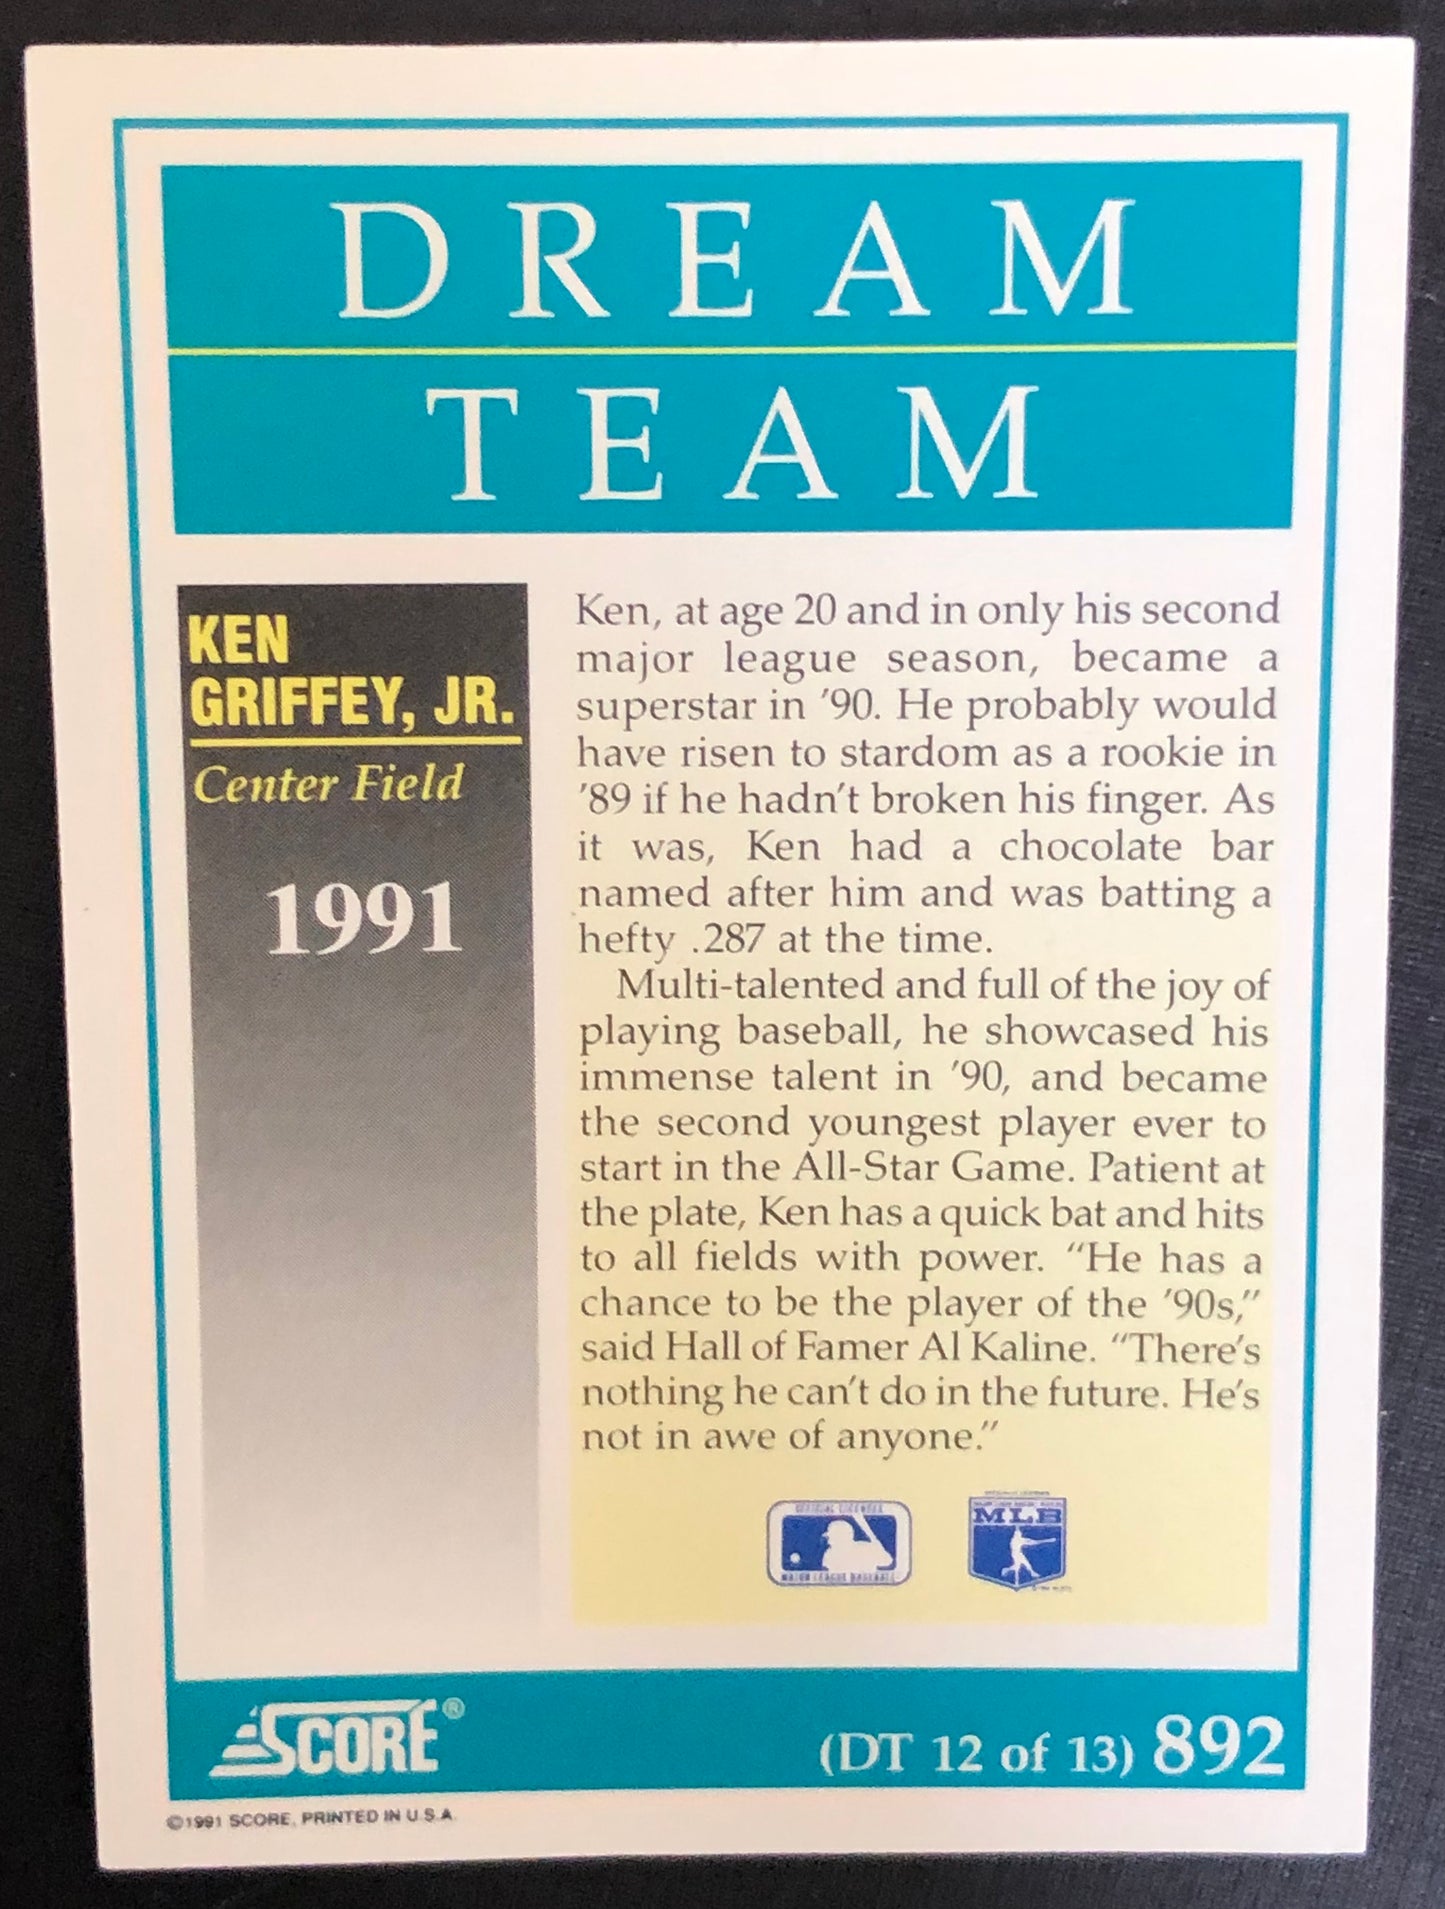 1991 Score #892 Ken Griffey Jr. - Dream Team